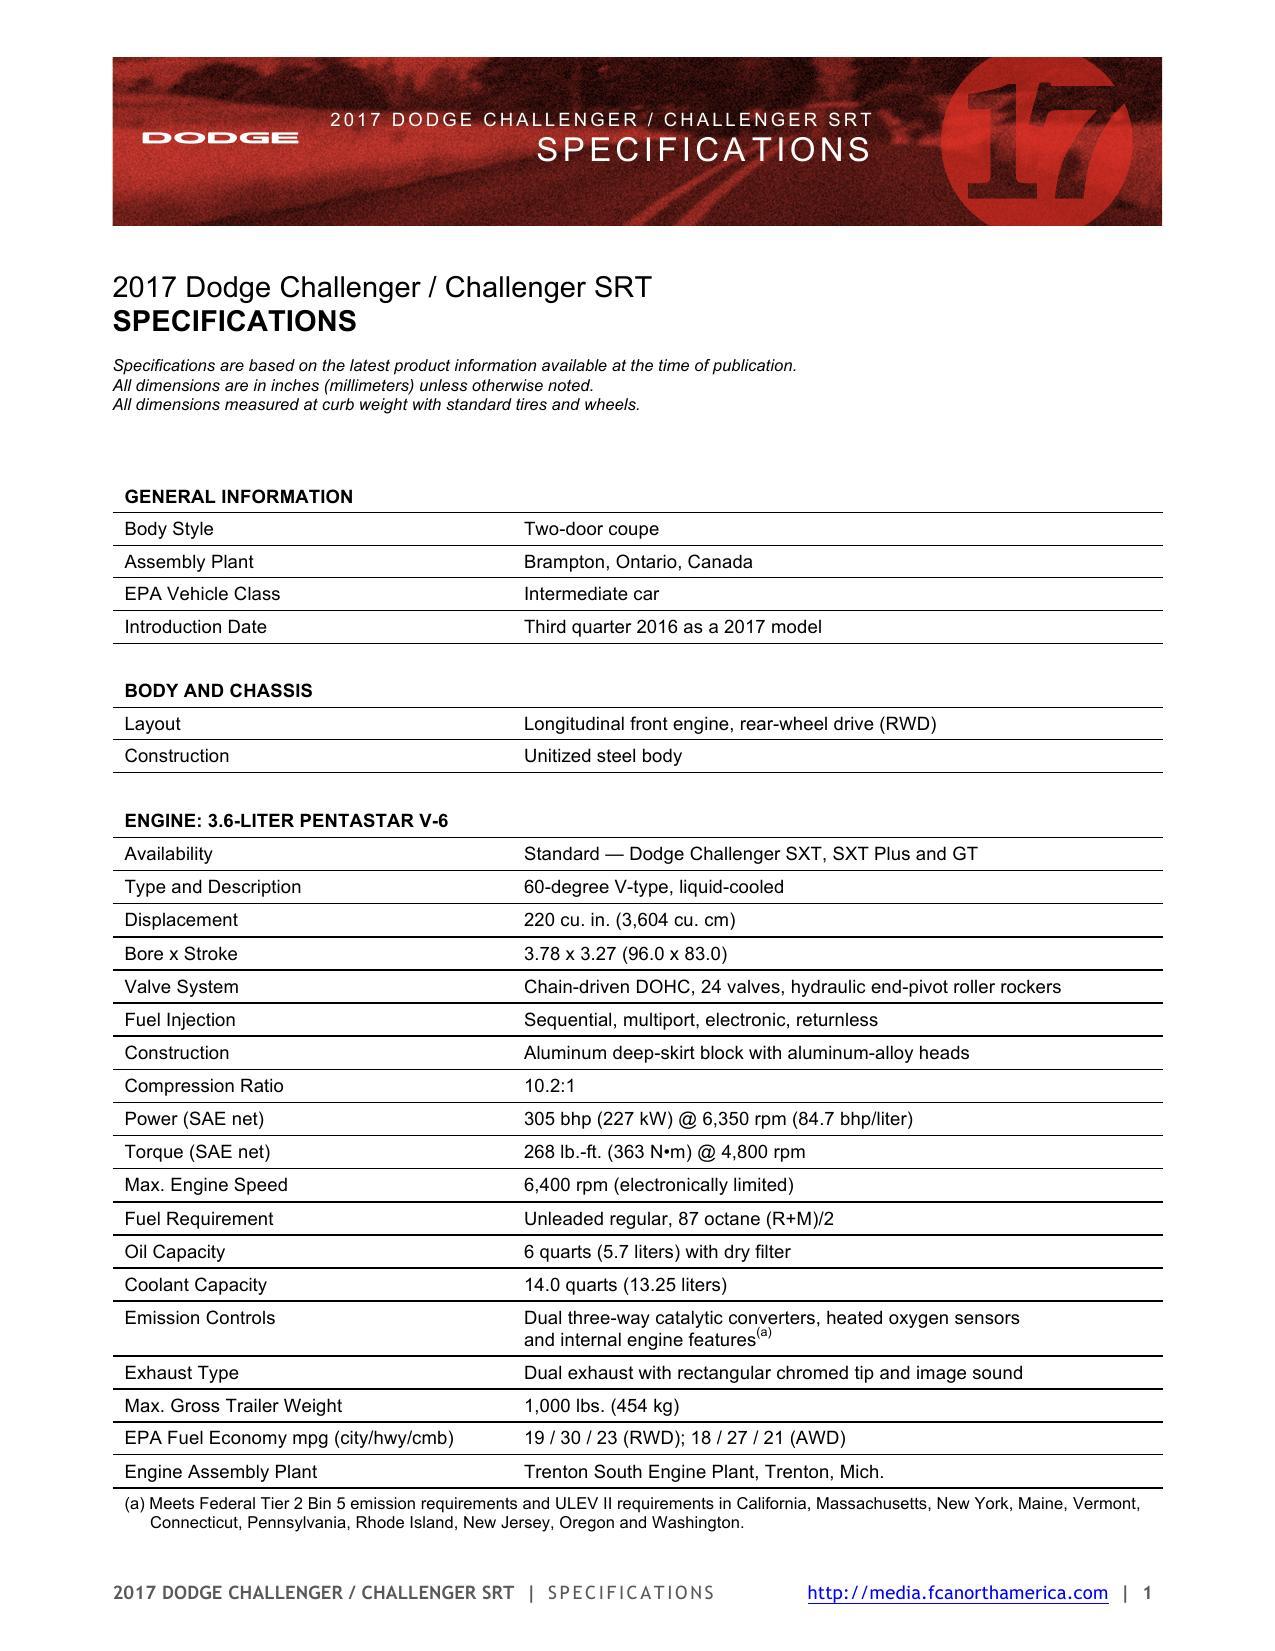 2017-dodge-challenger-challenger-srt-specifications.pdf